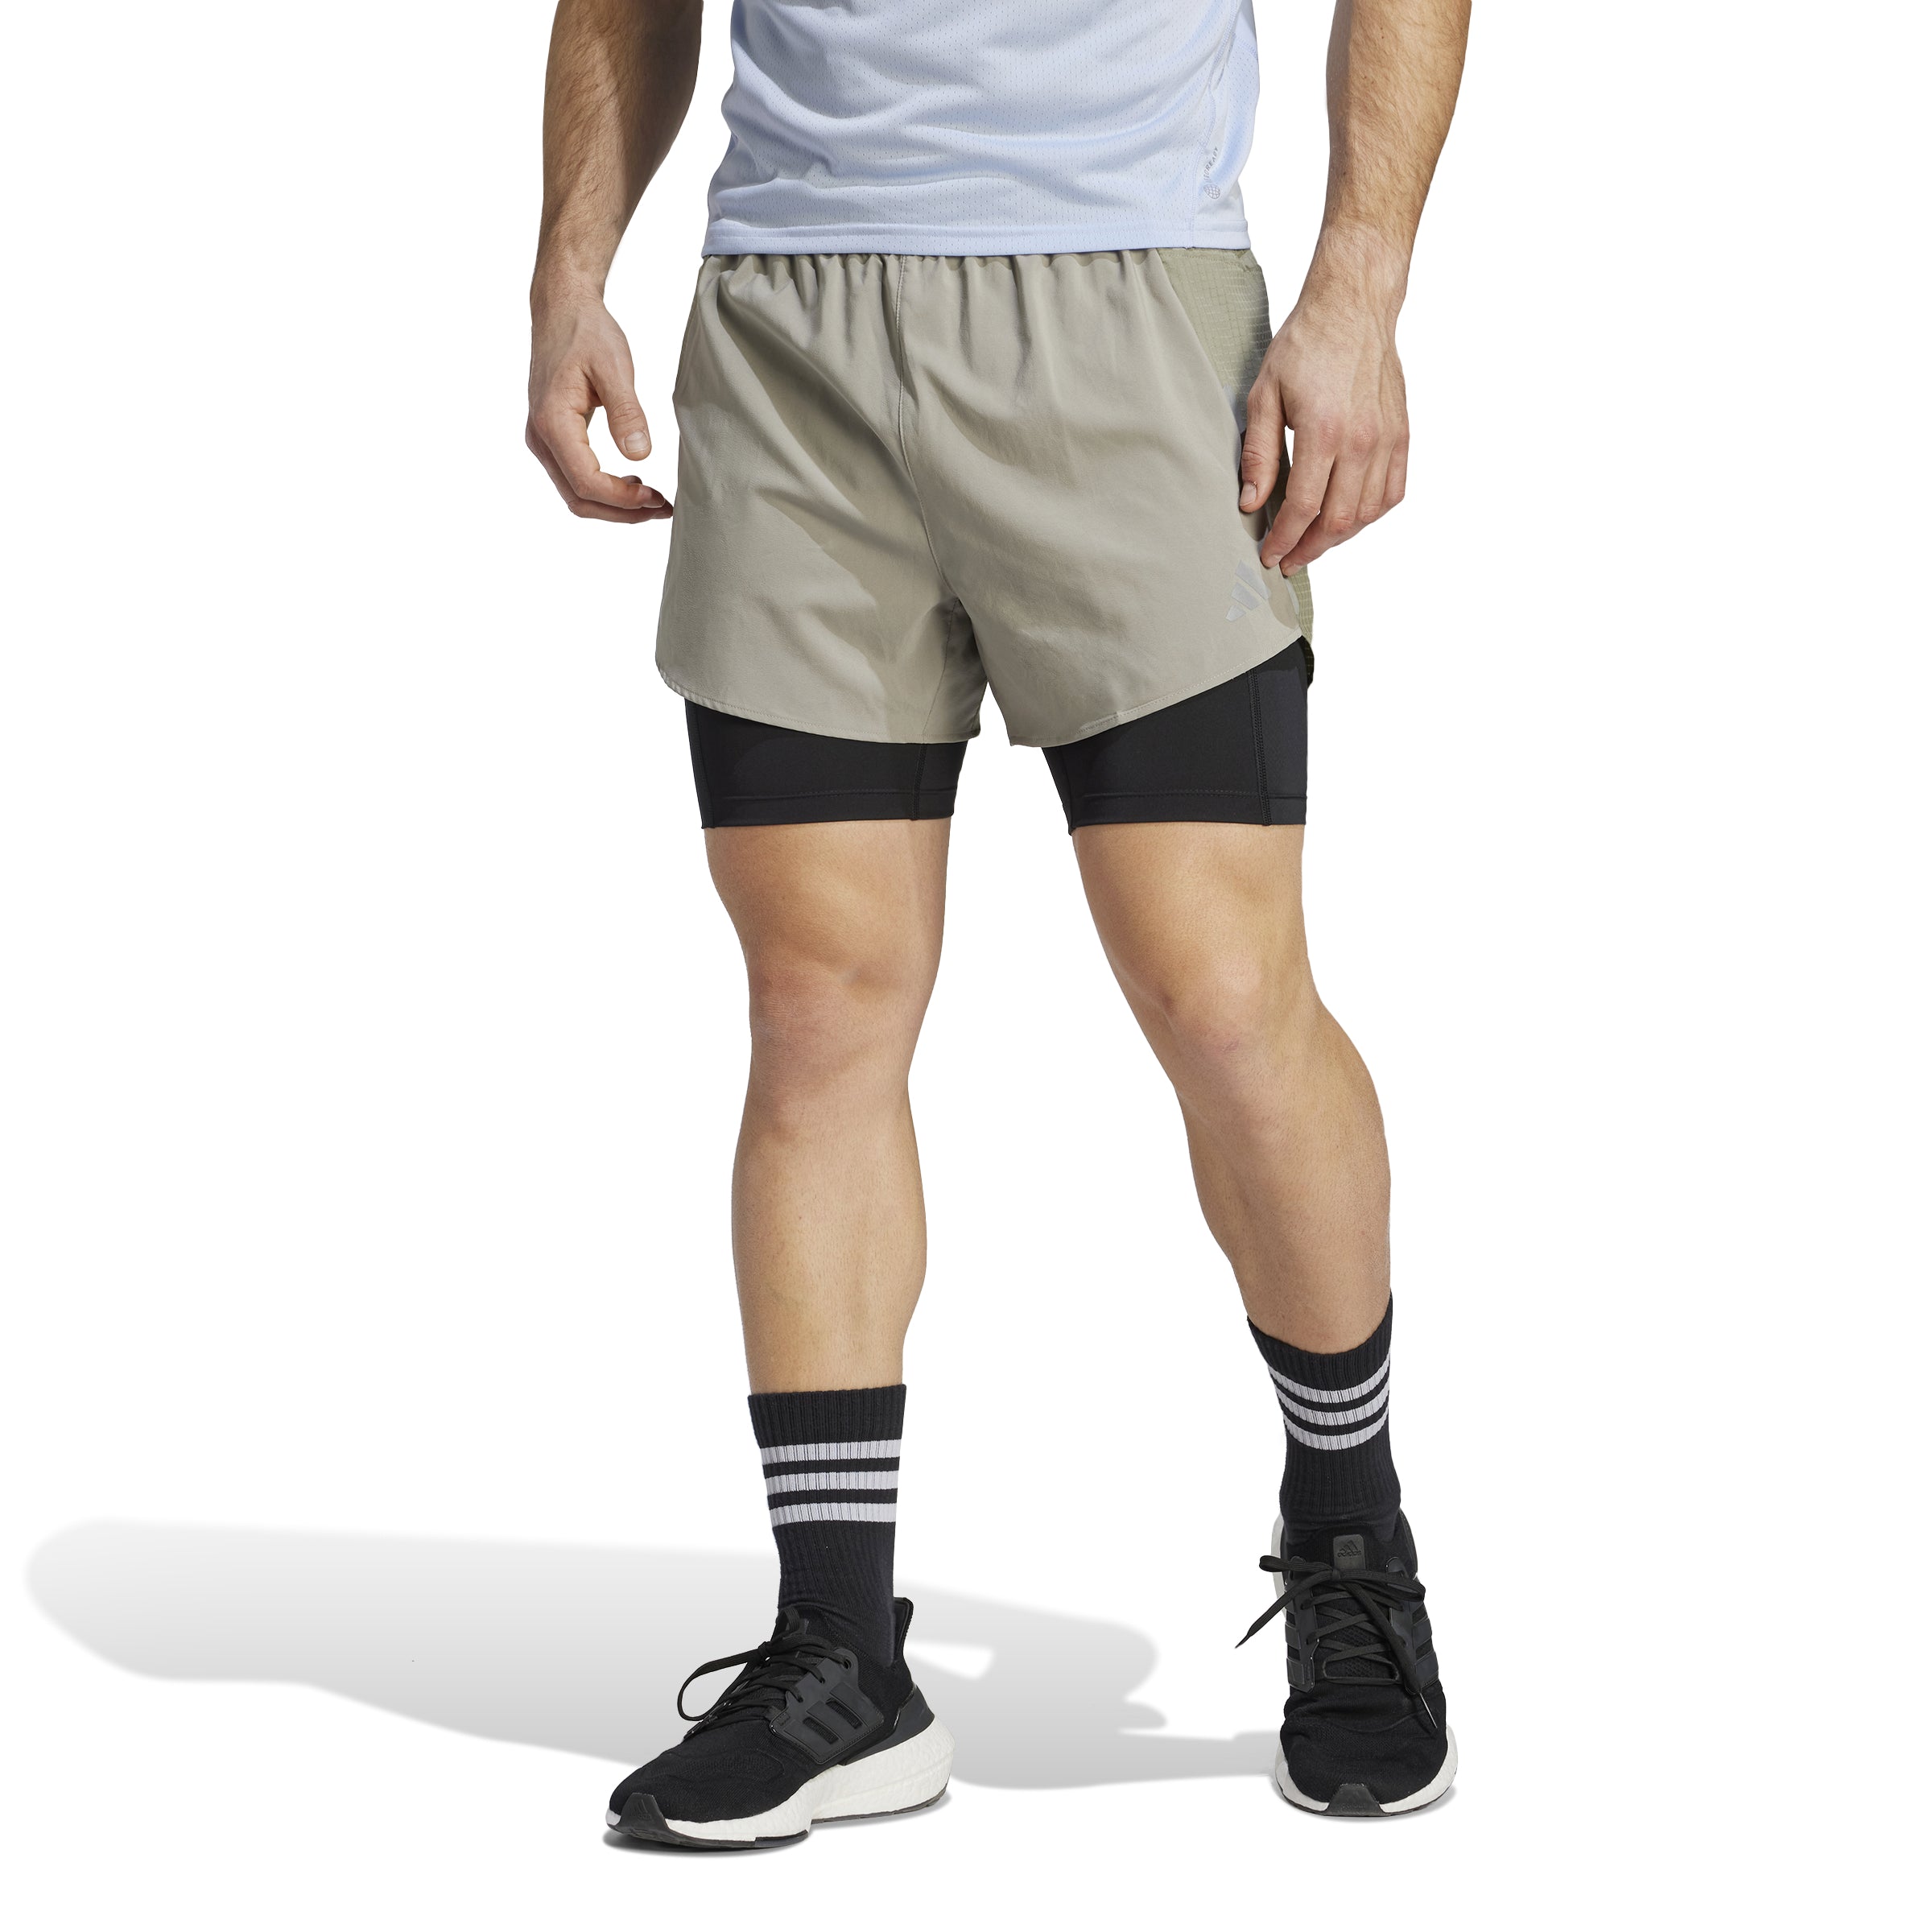 Designed for Running 2-in-1 Shorts